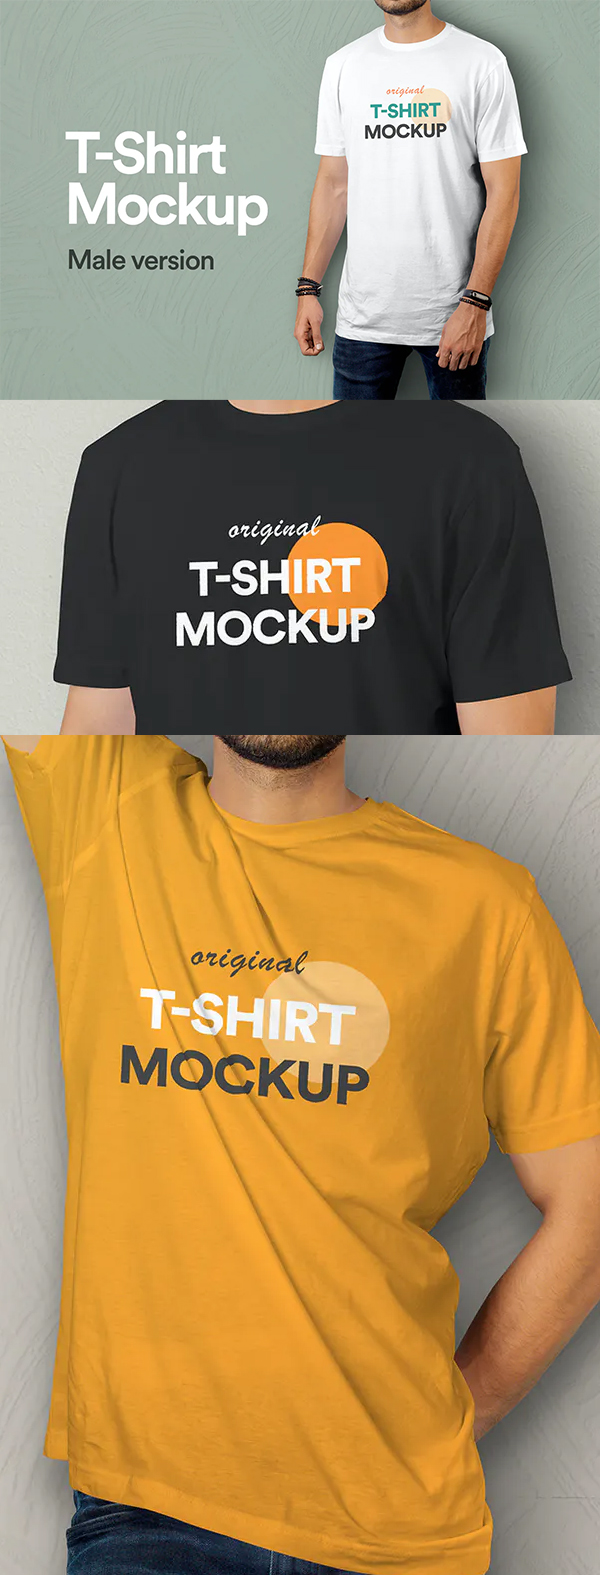 New T-Shirt Mockup